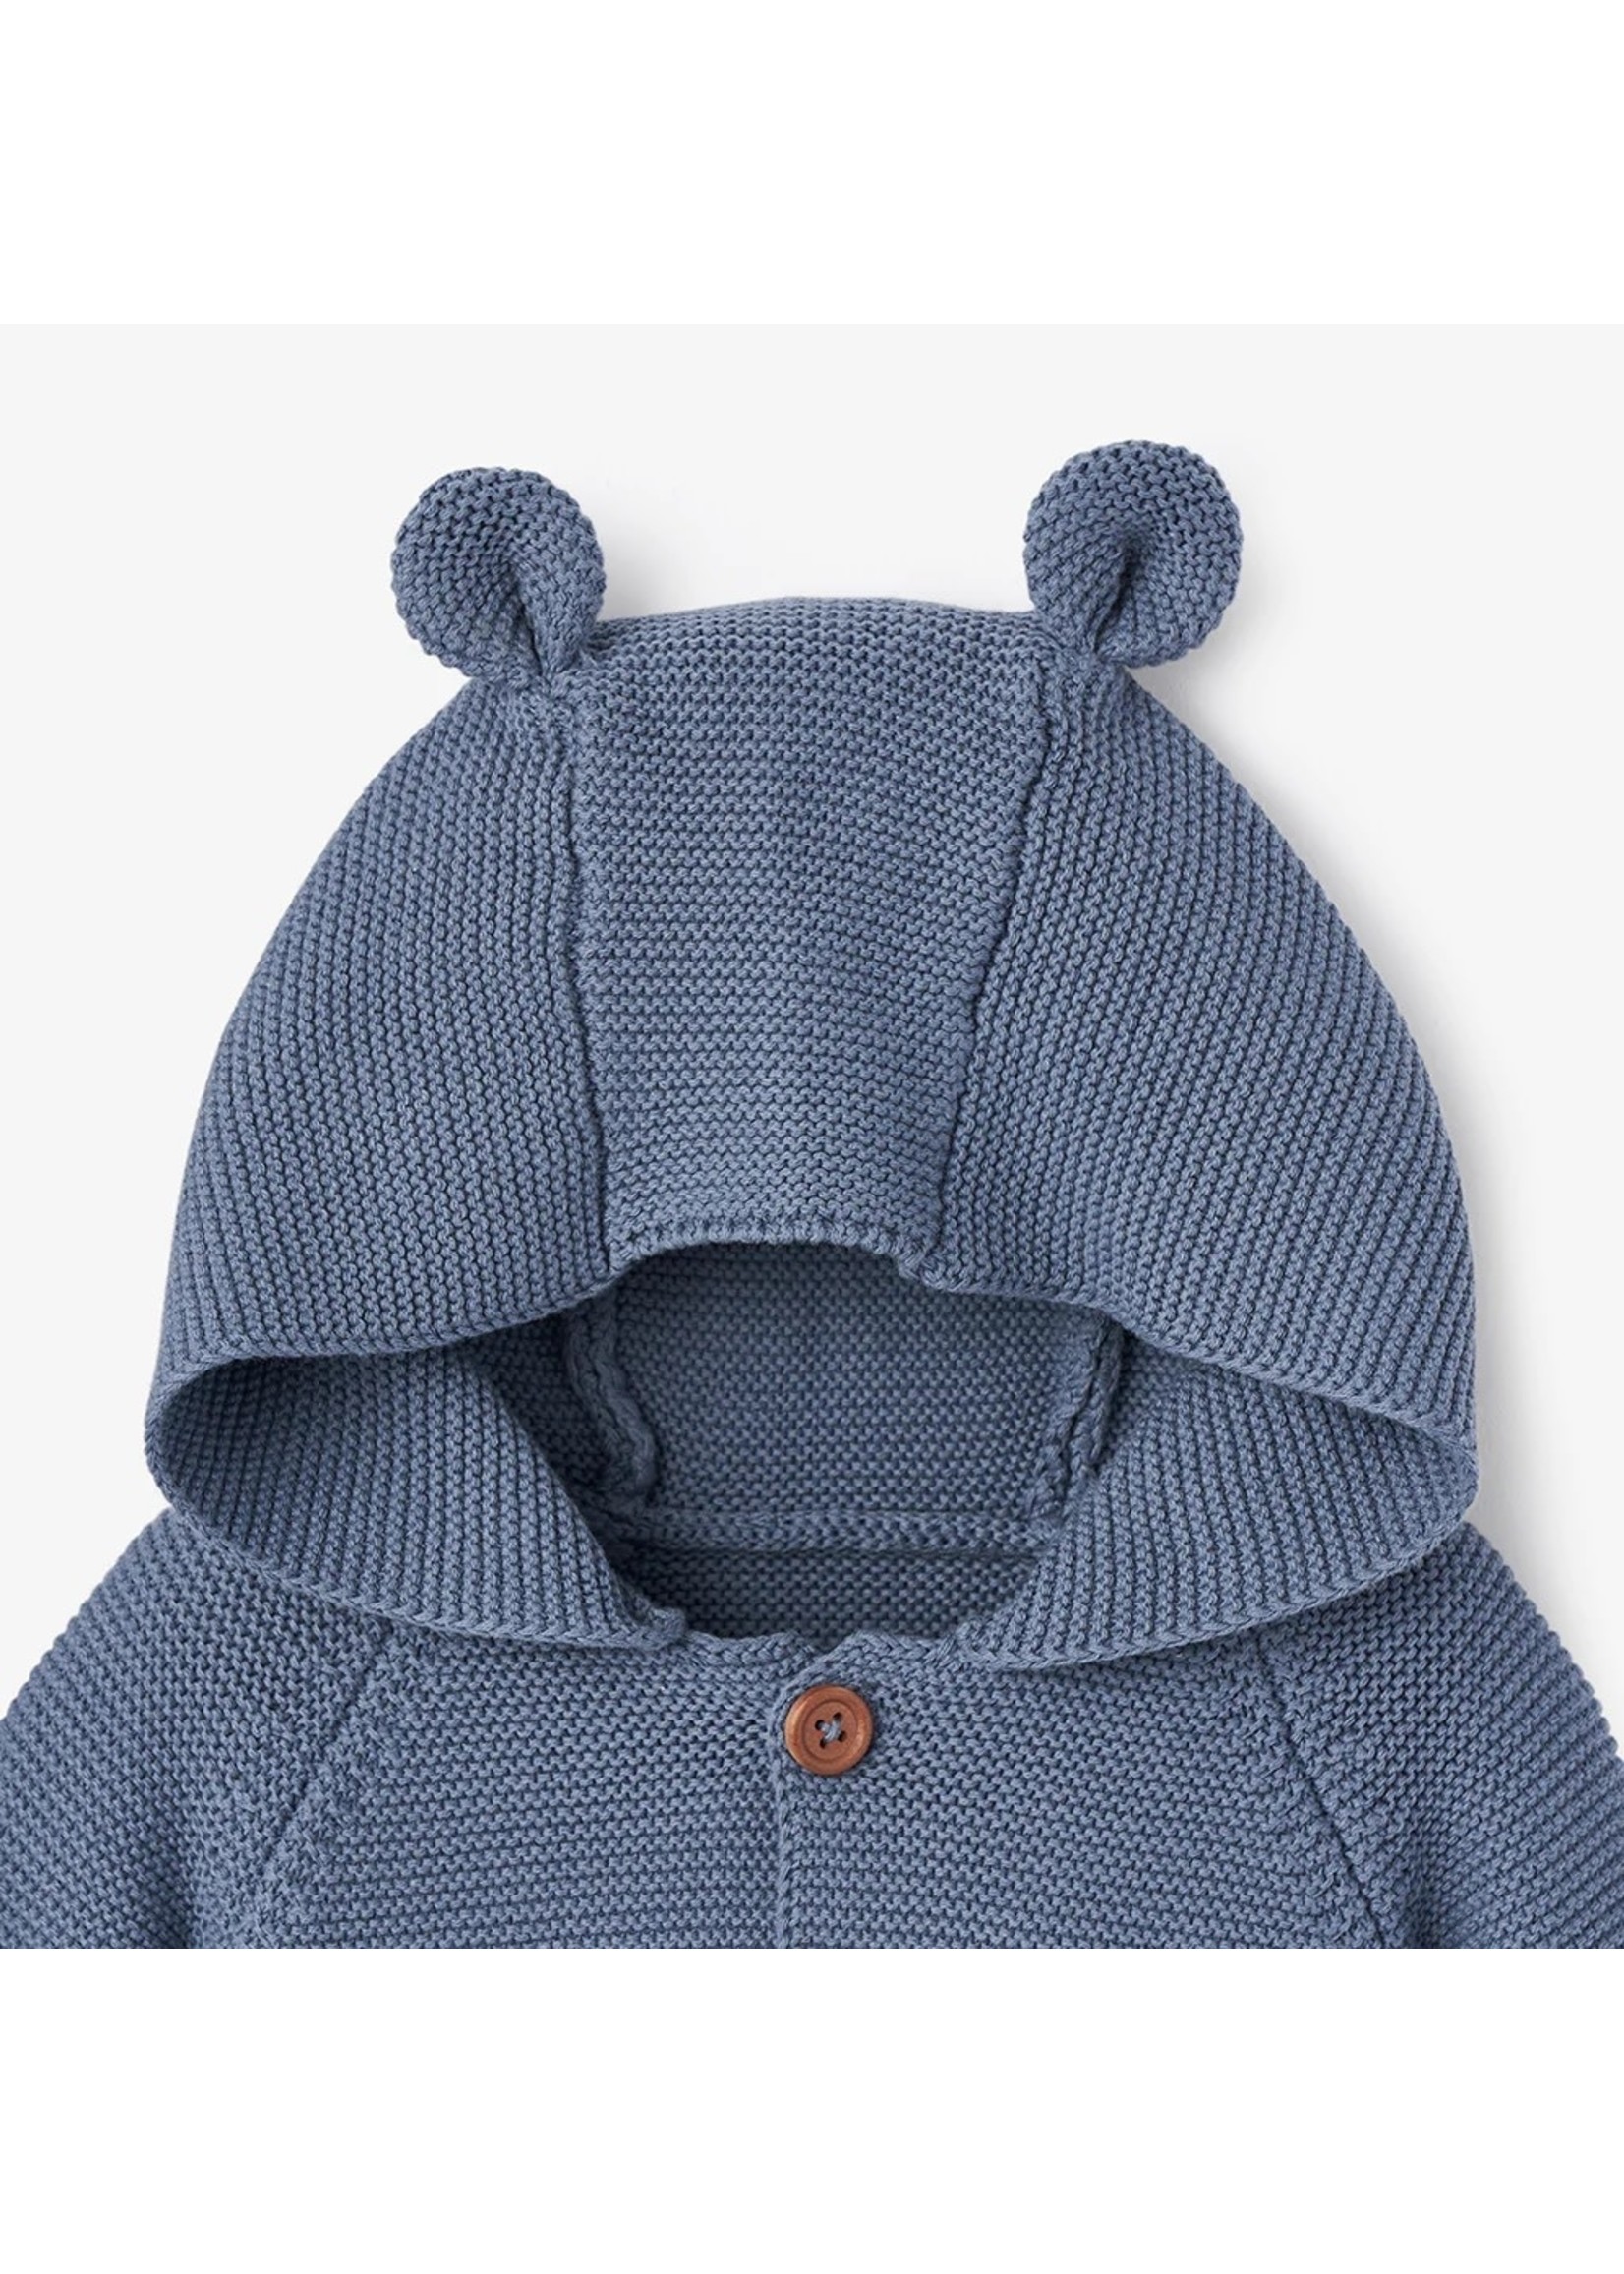 Bear Ear Hooded Knit Baby Cardigan Blue 6M